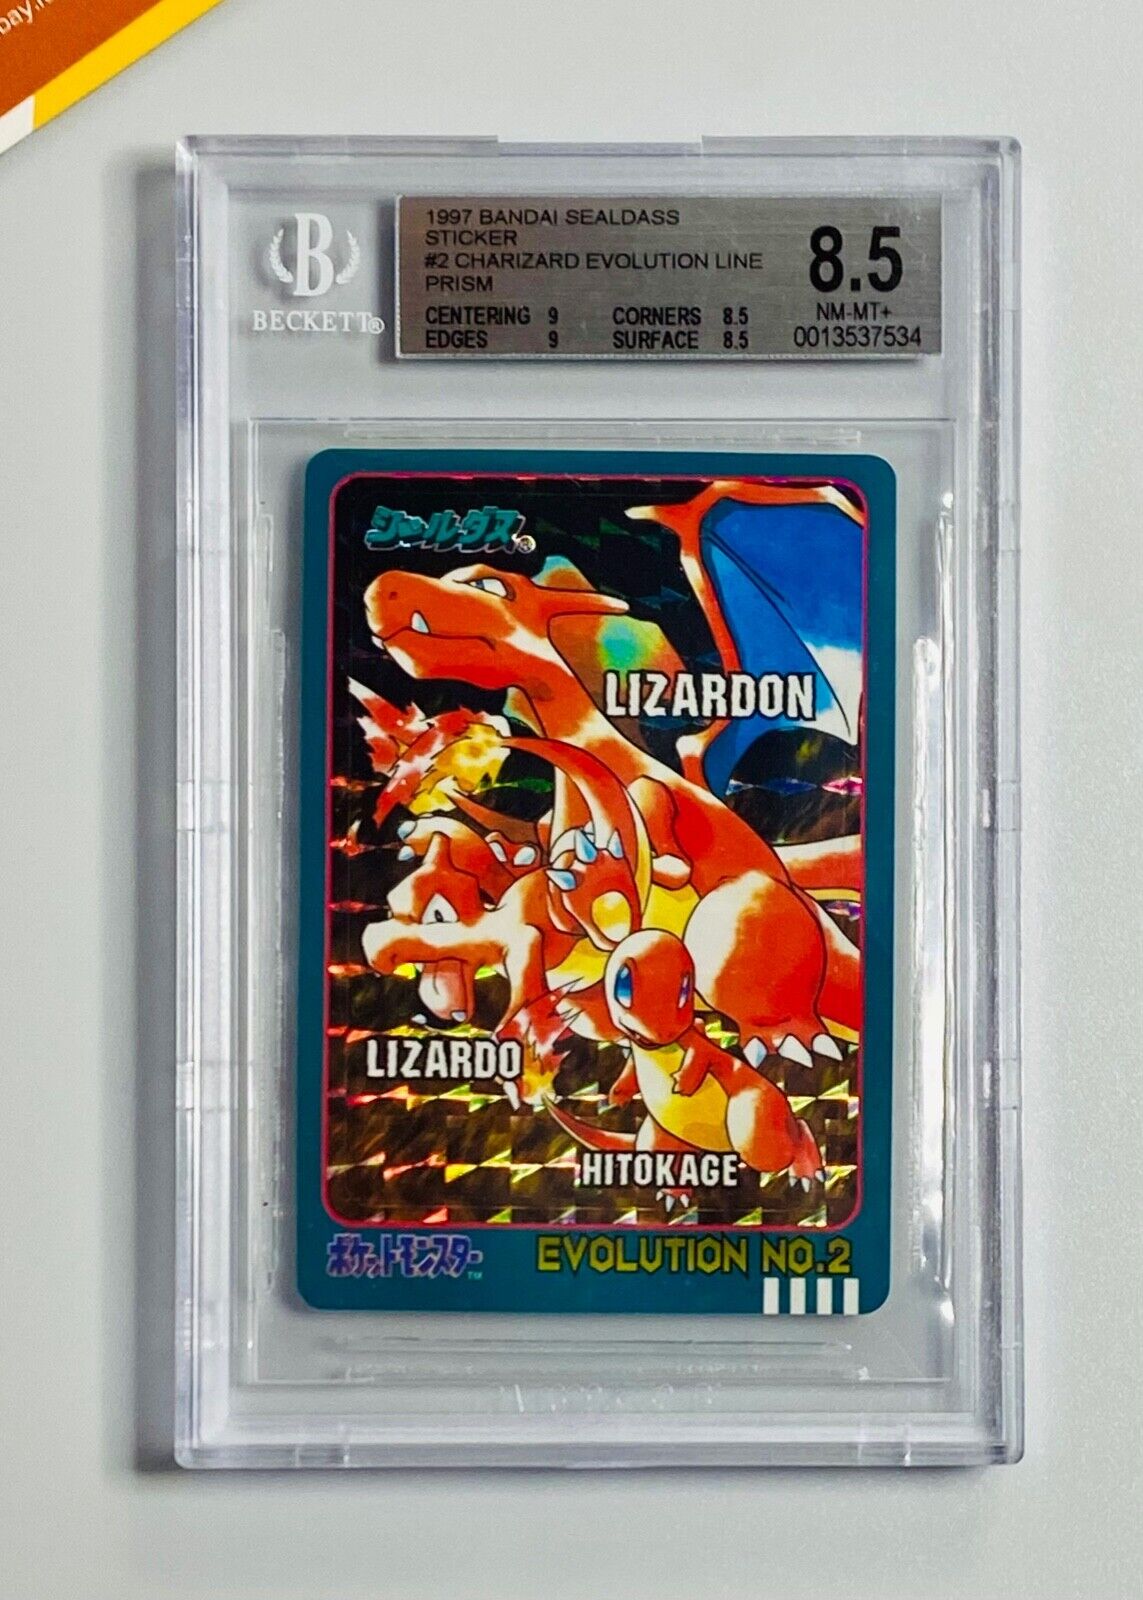 1997 Pokemon BGS 8.5 Charizard Evo Line Prism Bandai Sealdass #2 Japanese